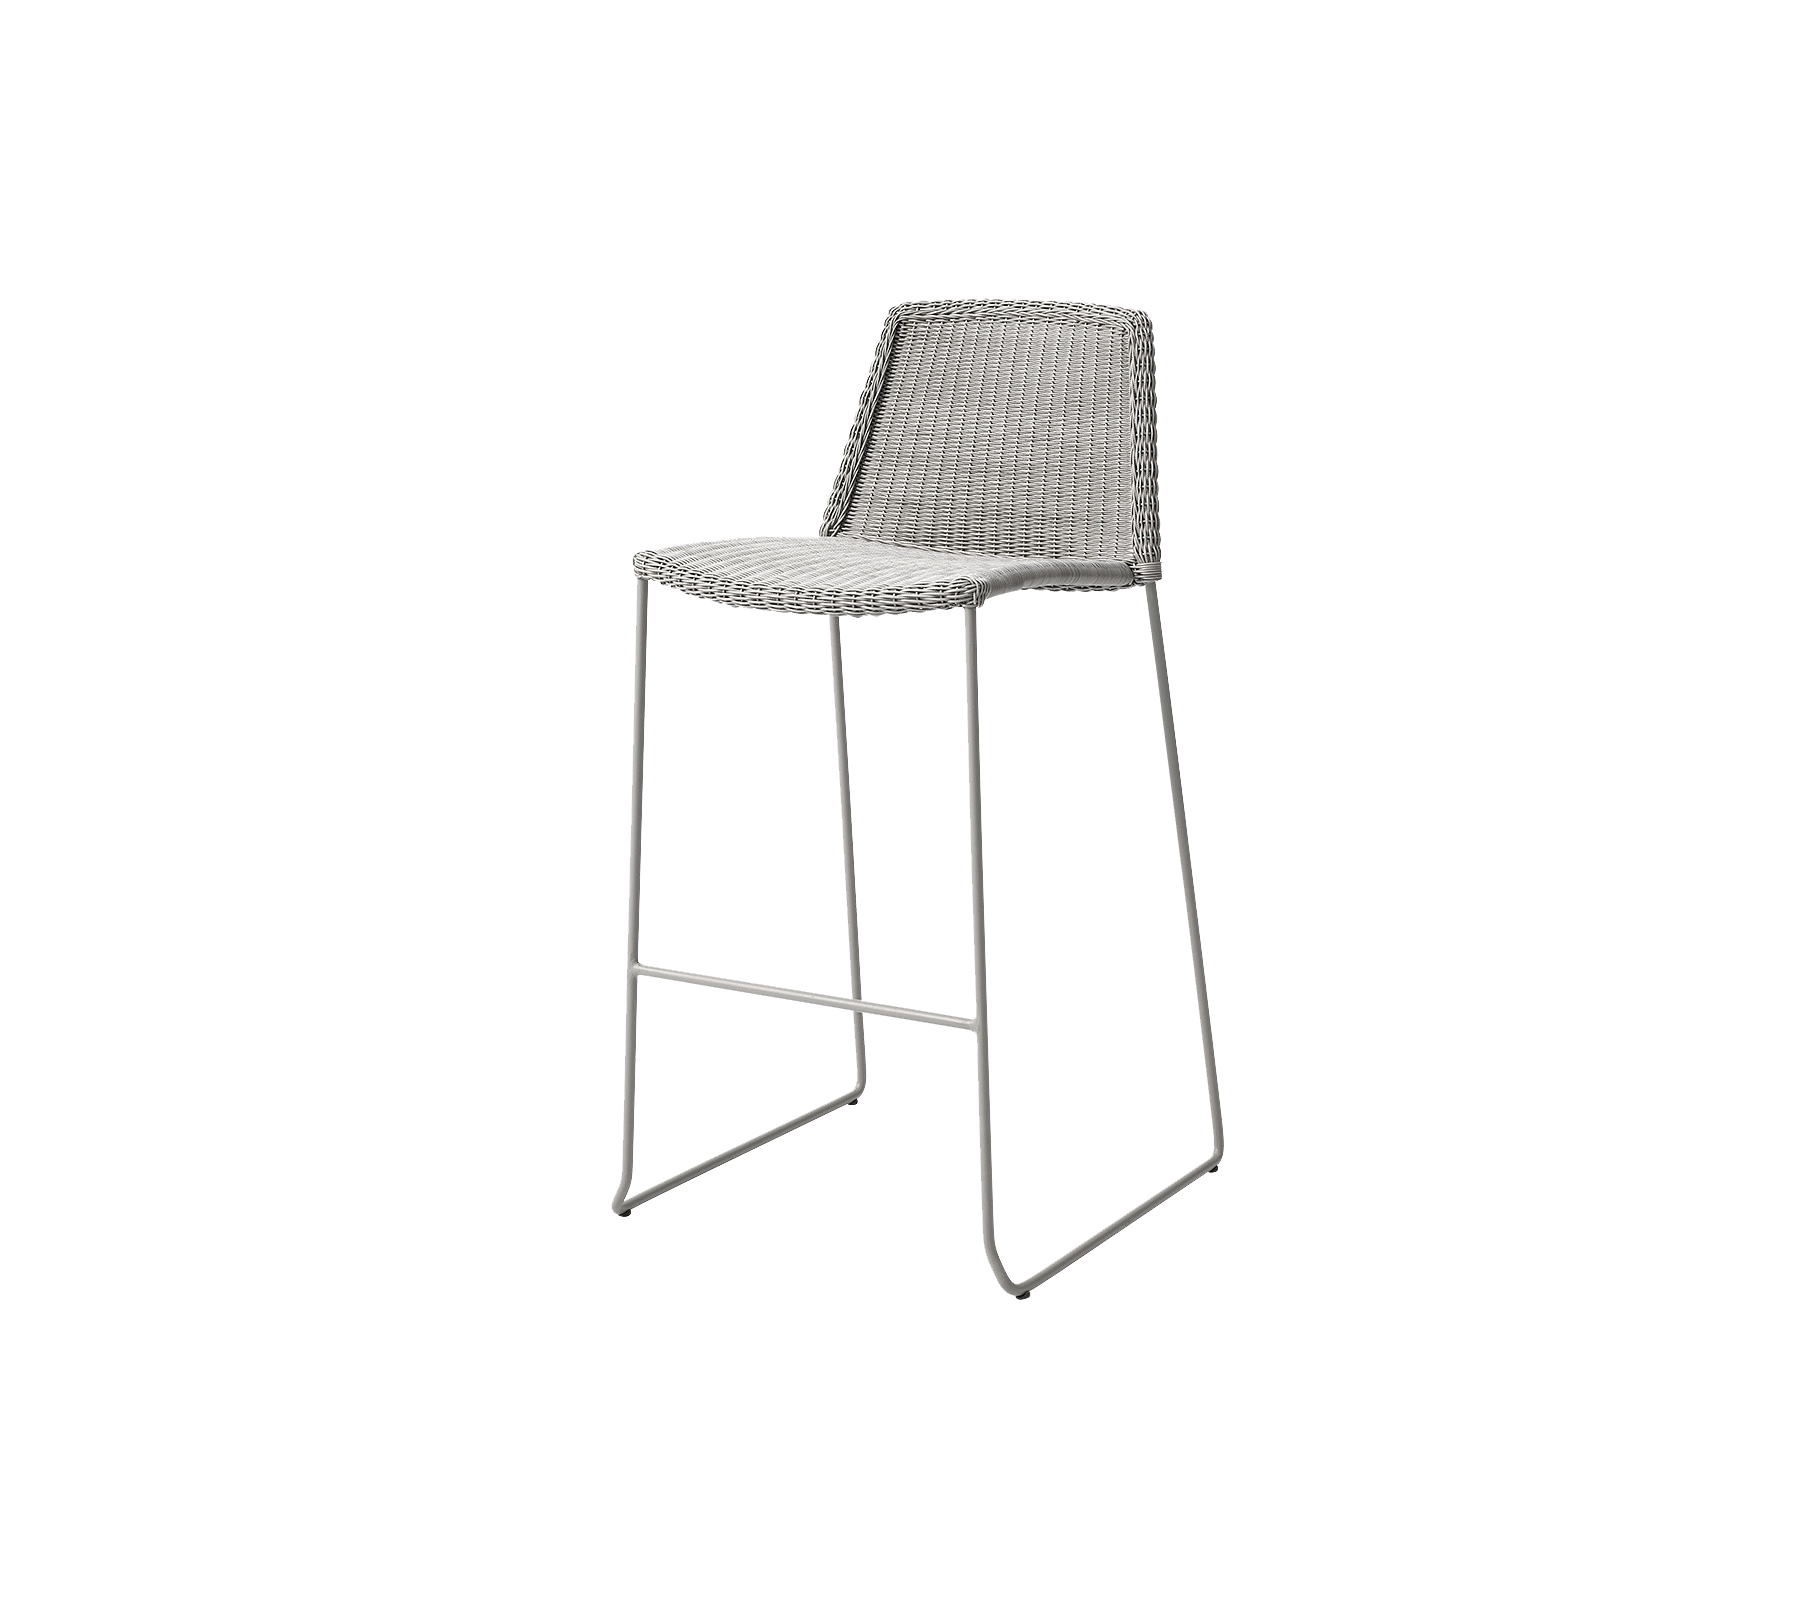 Cane-Line - Breeze bar chair, stackable - 5465